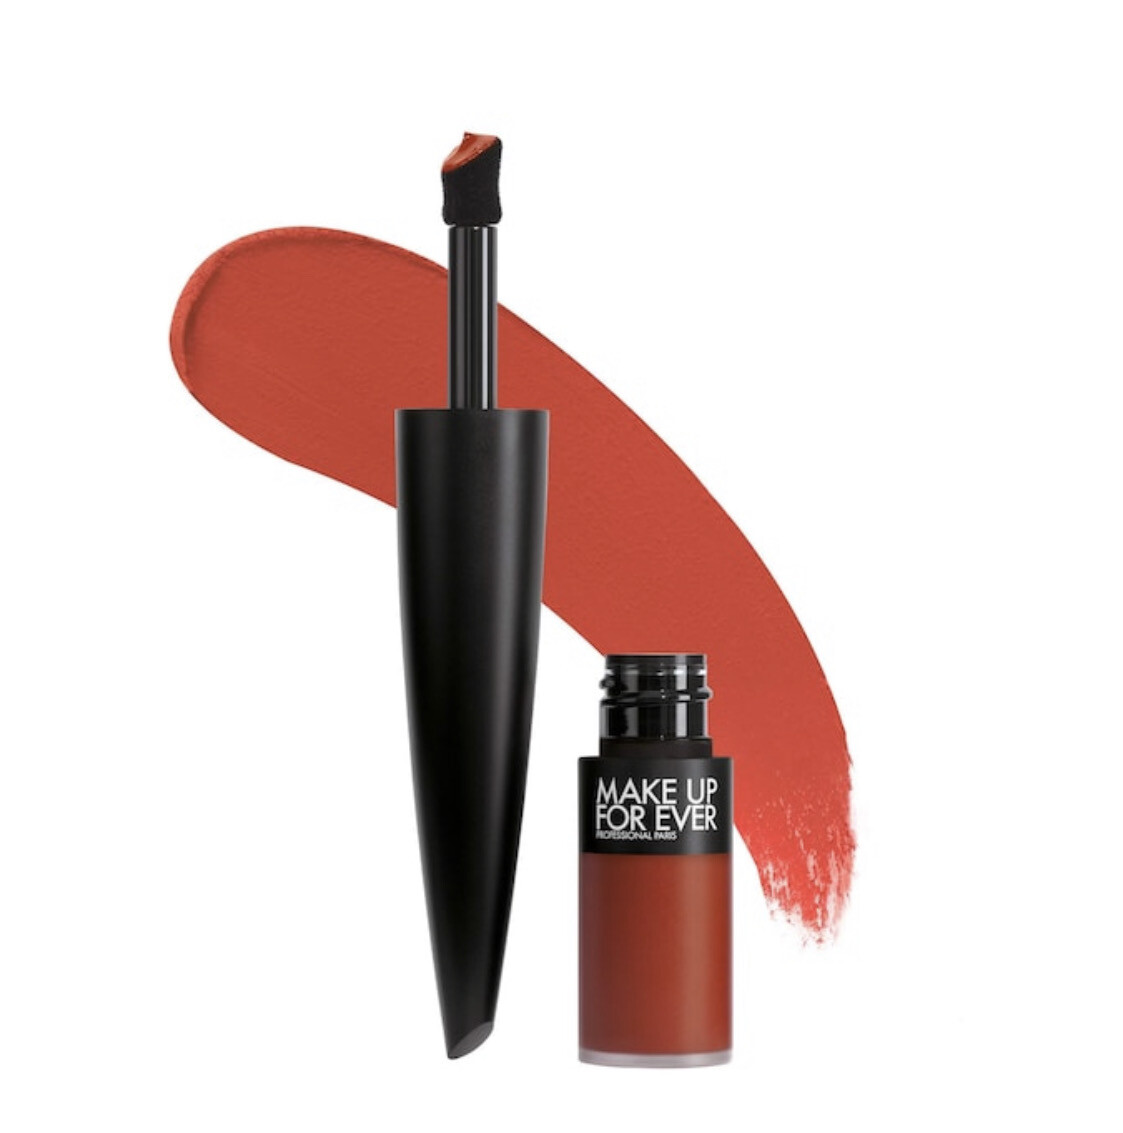 Make Up For Ever - Rouge Artist For Ever Matte 24HR Longwear Liquid Lipstick | 342 Infinite Sunset - warm red